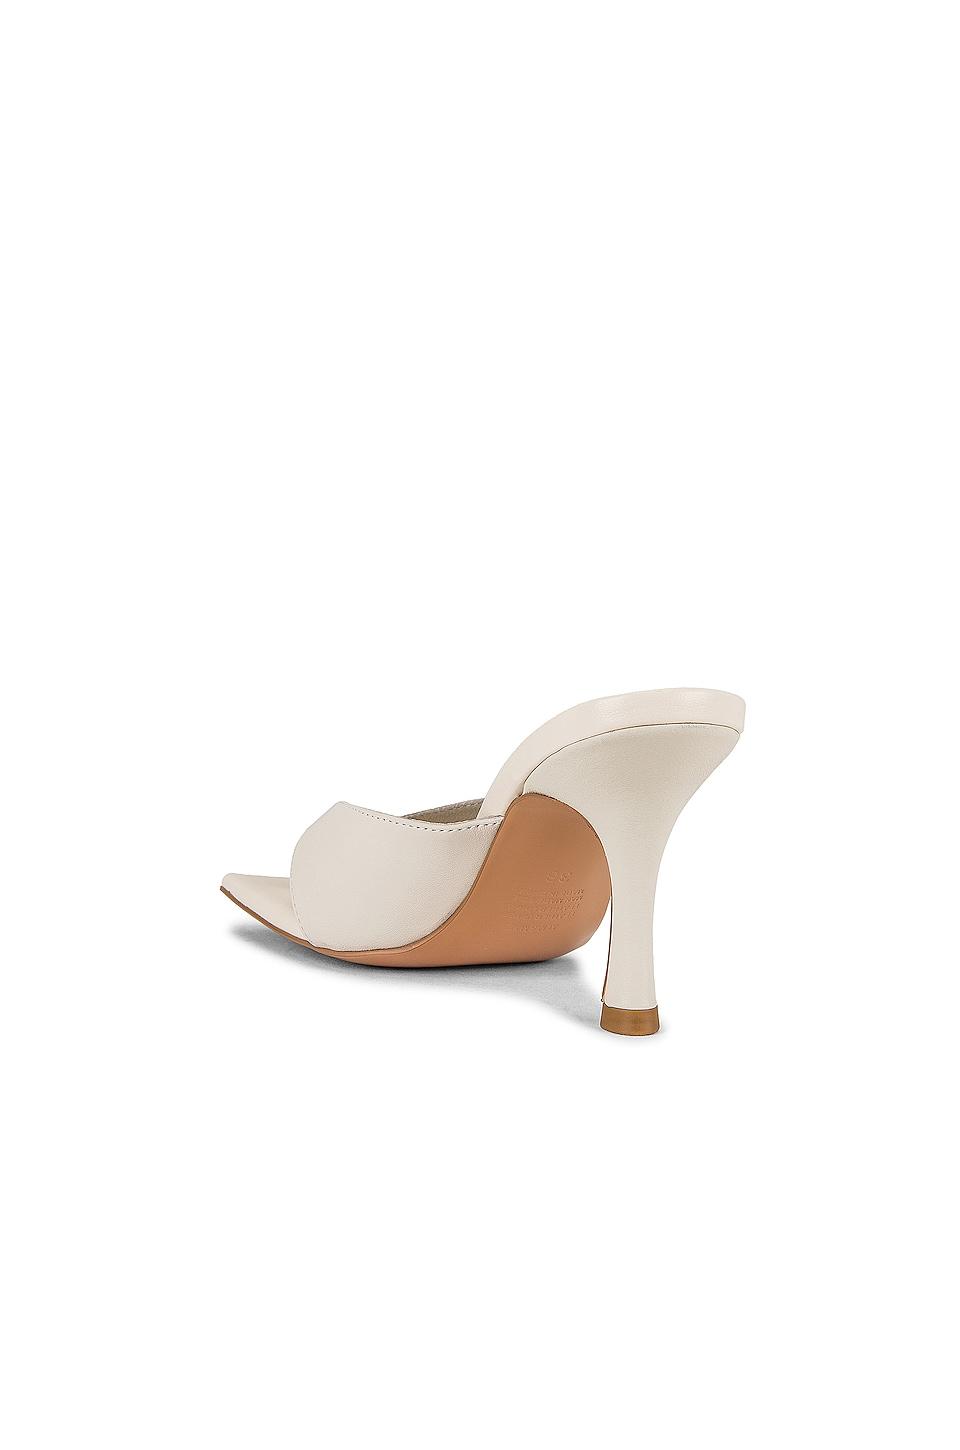 Alias Mae Florence Mule Sandal in White | Lyst